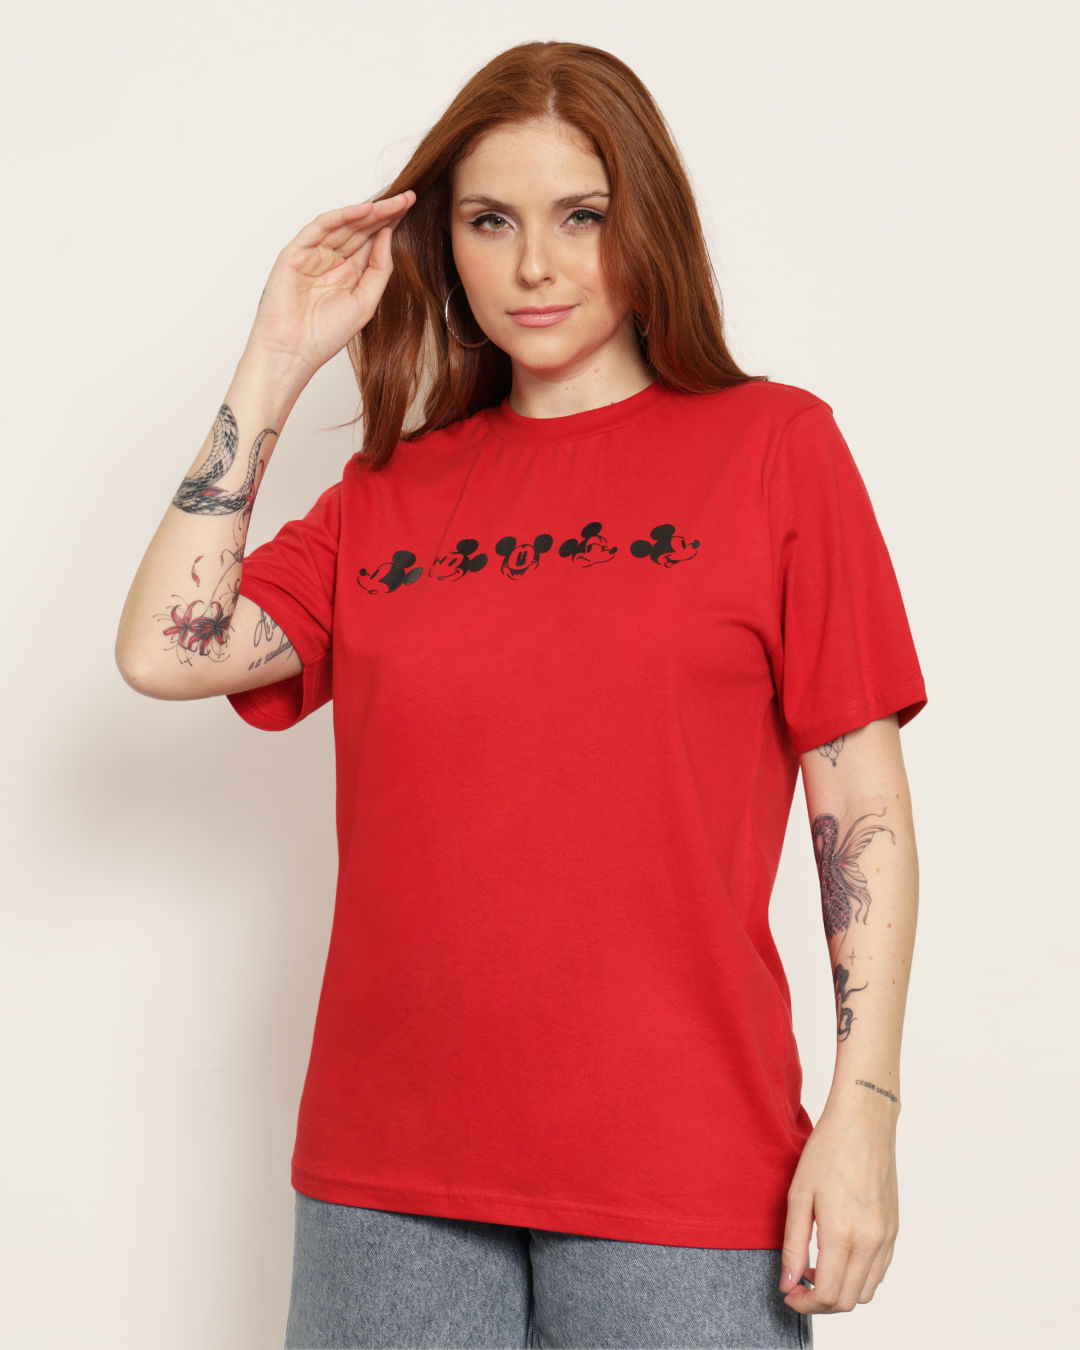 Camiseta-Mc-Fverso-Pg-Mick-Tral941---Vermelho-Medio